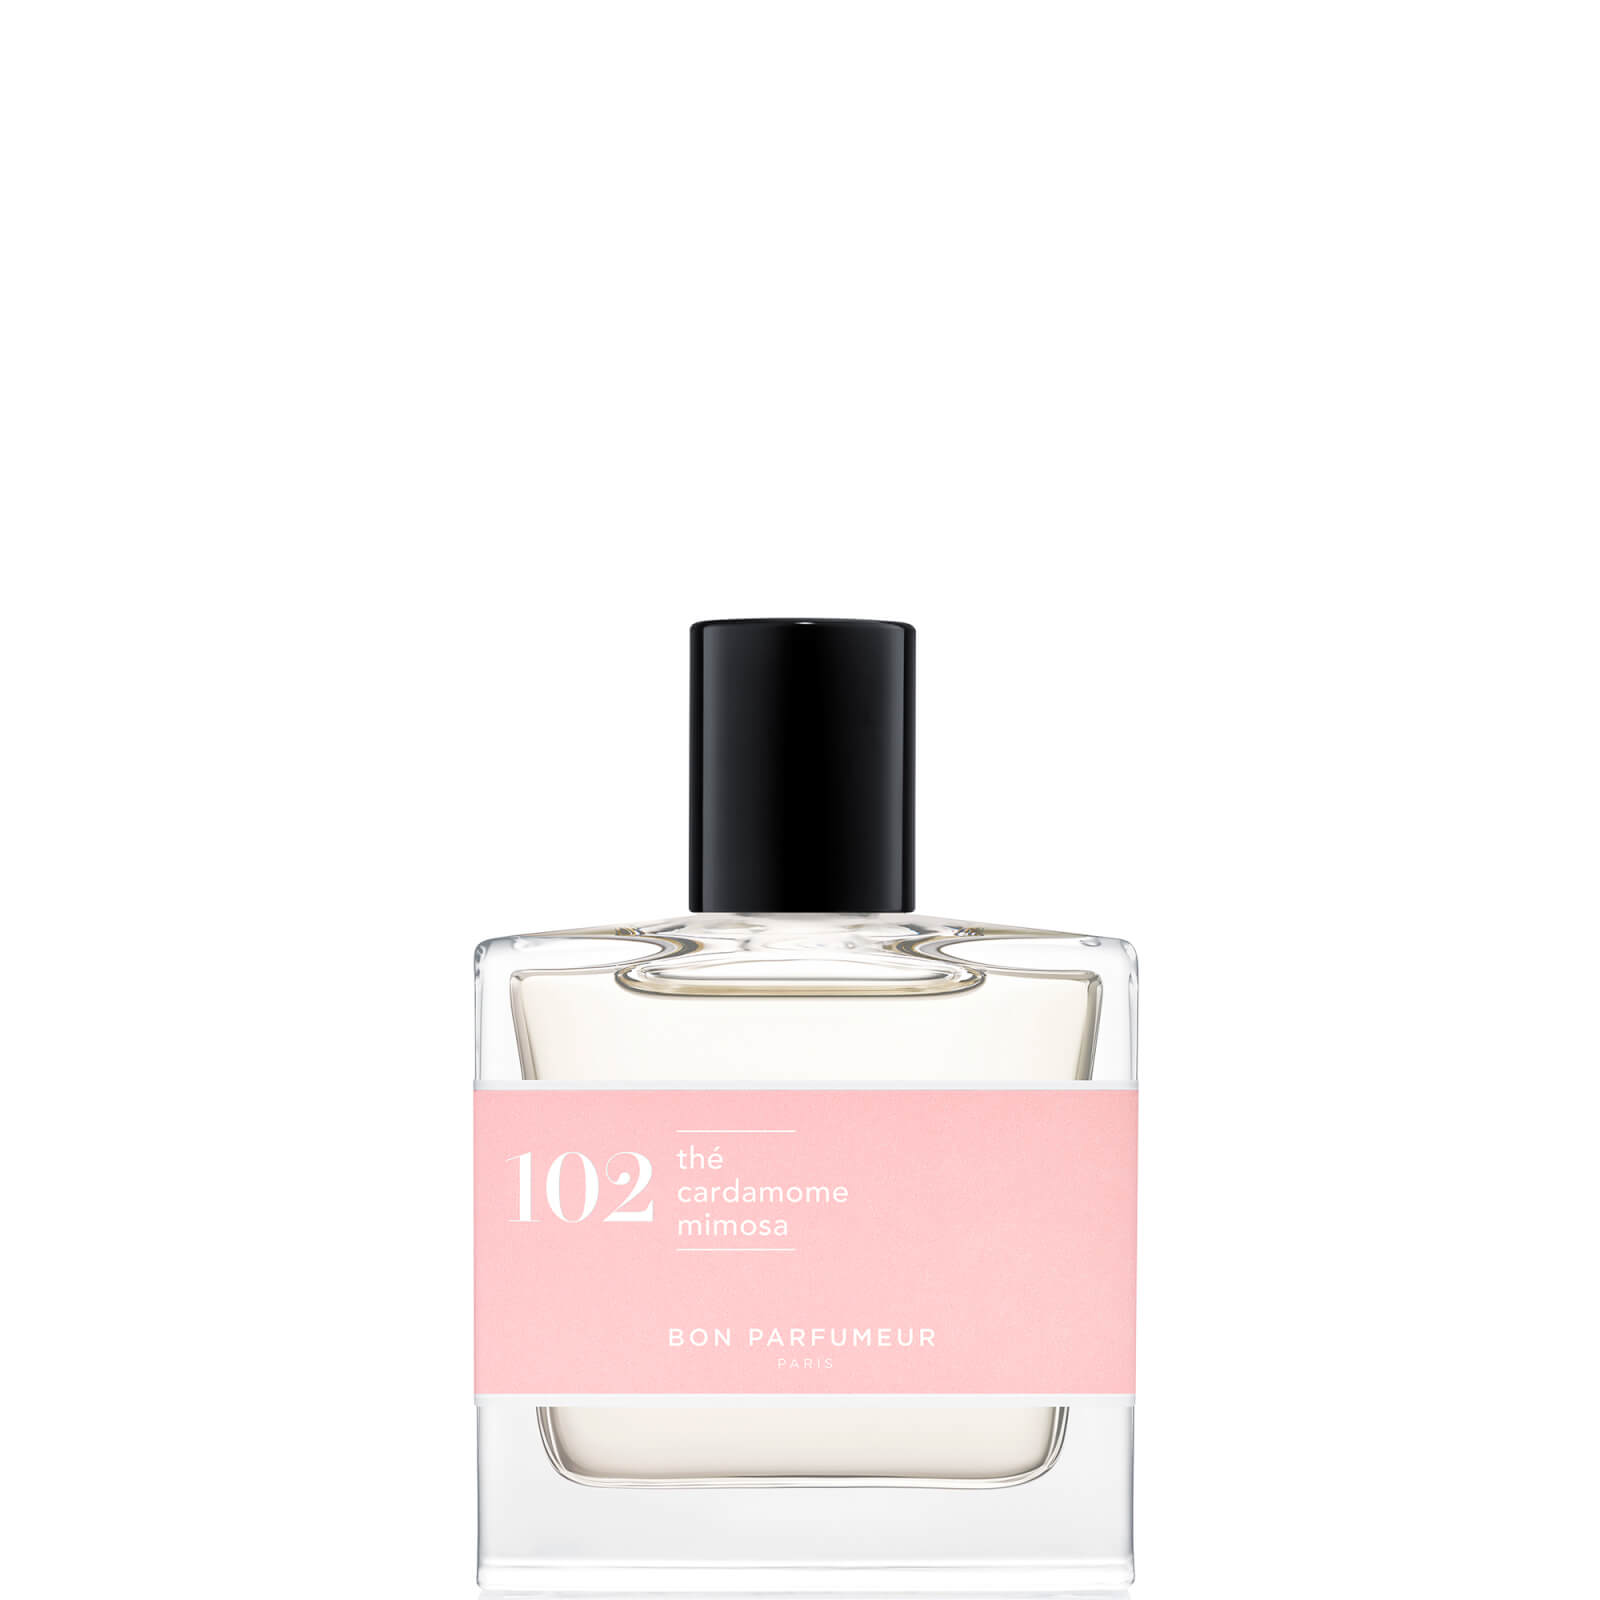 Image of Bon Parfumeur 102 Tea Cardamom Mimosa Eau de Parfum - 30ml